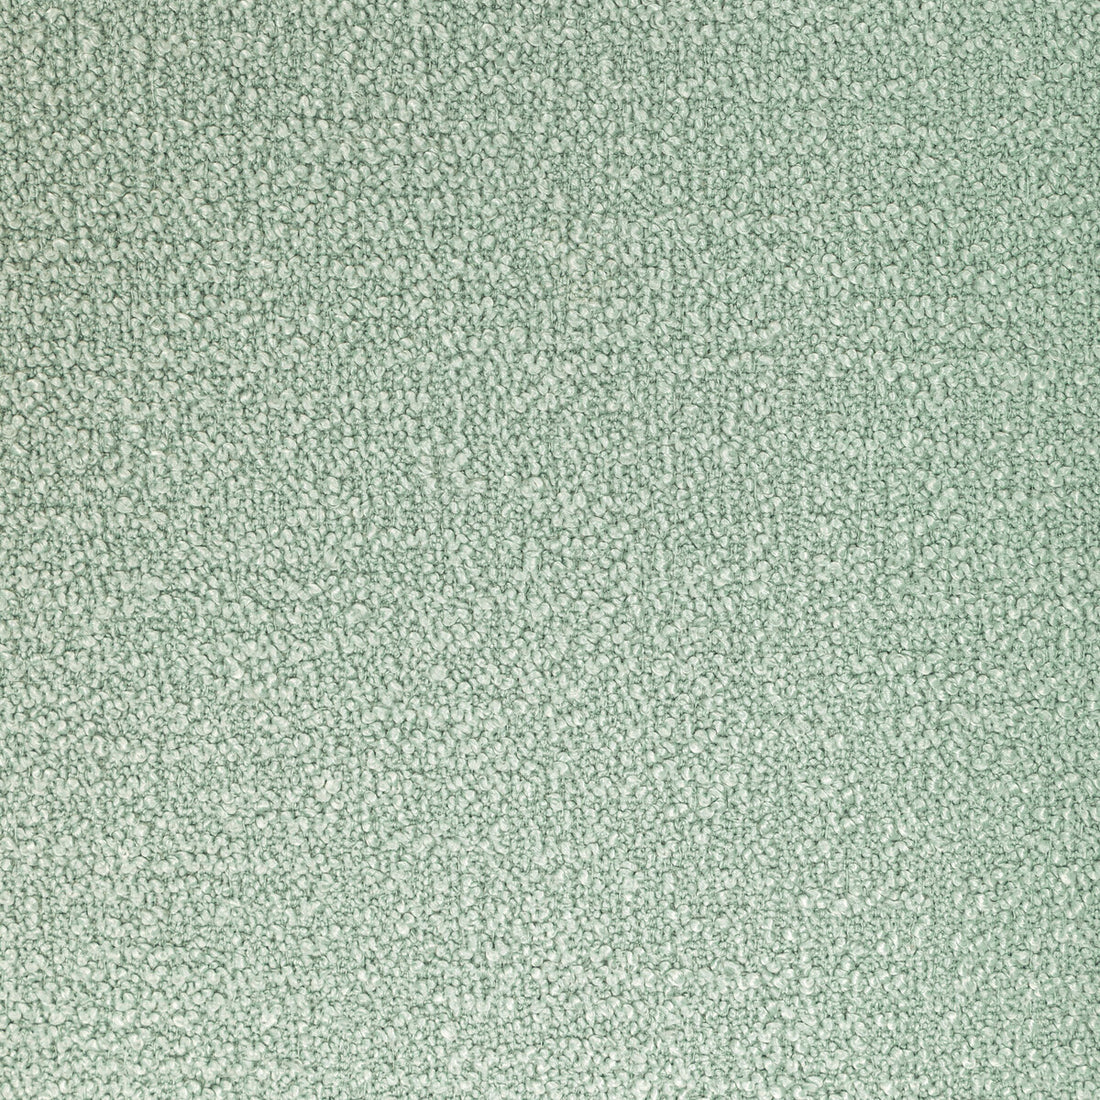 Kravet Smart fabric in 36857-30 color - pattern 36857.30.0 - by Kravet Smart in the Performance Kravetarmor collection